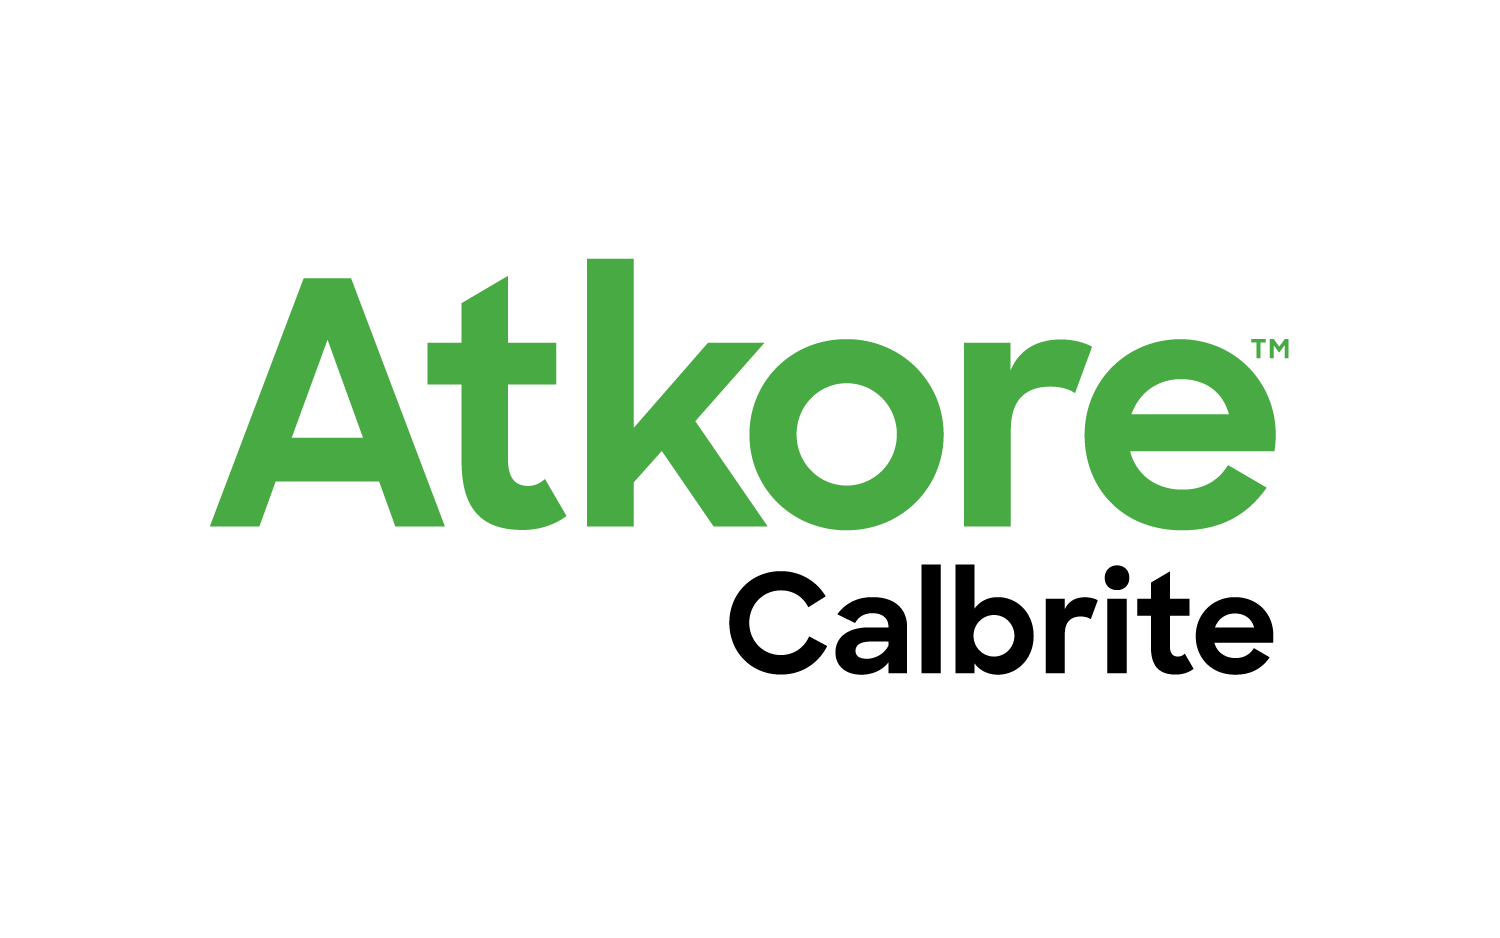 ATK 24194 Brand Logo SubBrand Calbrite RGB Color Stainless Steel Conduit